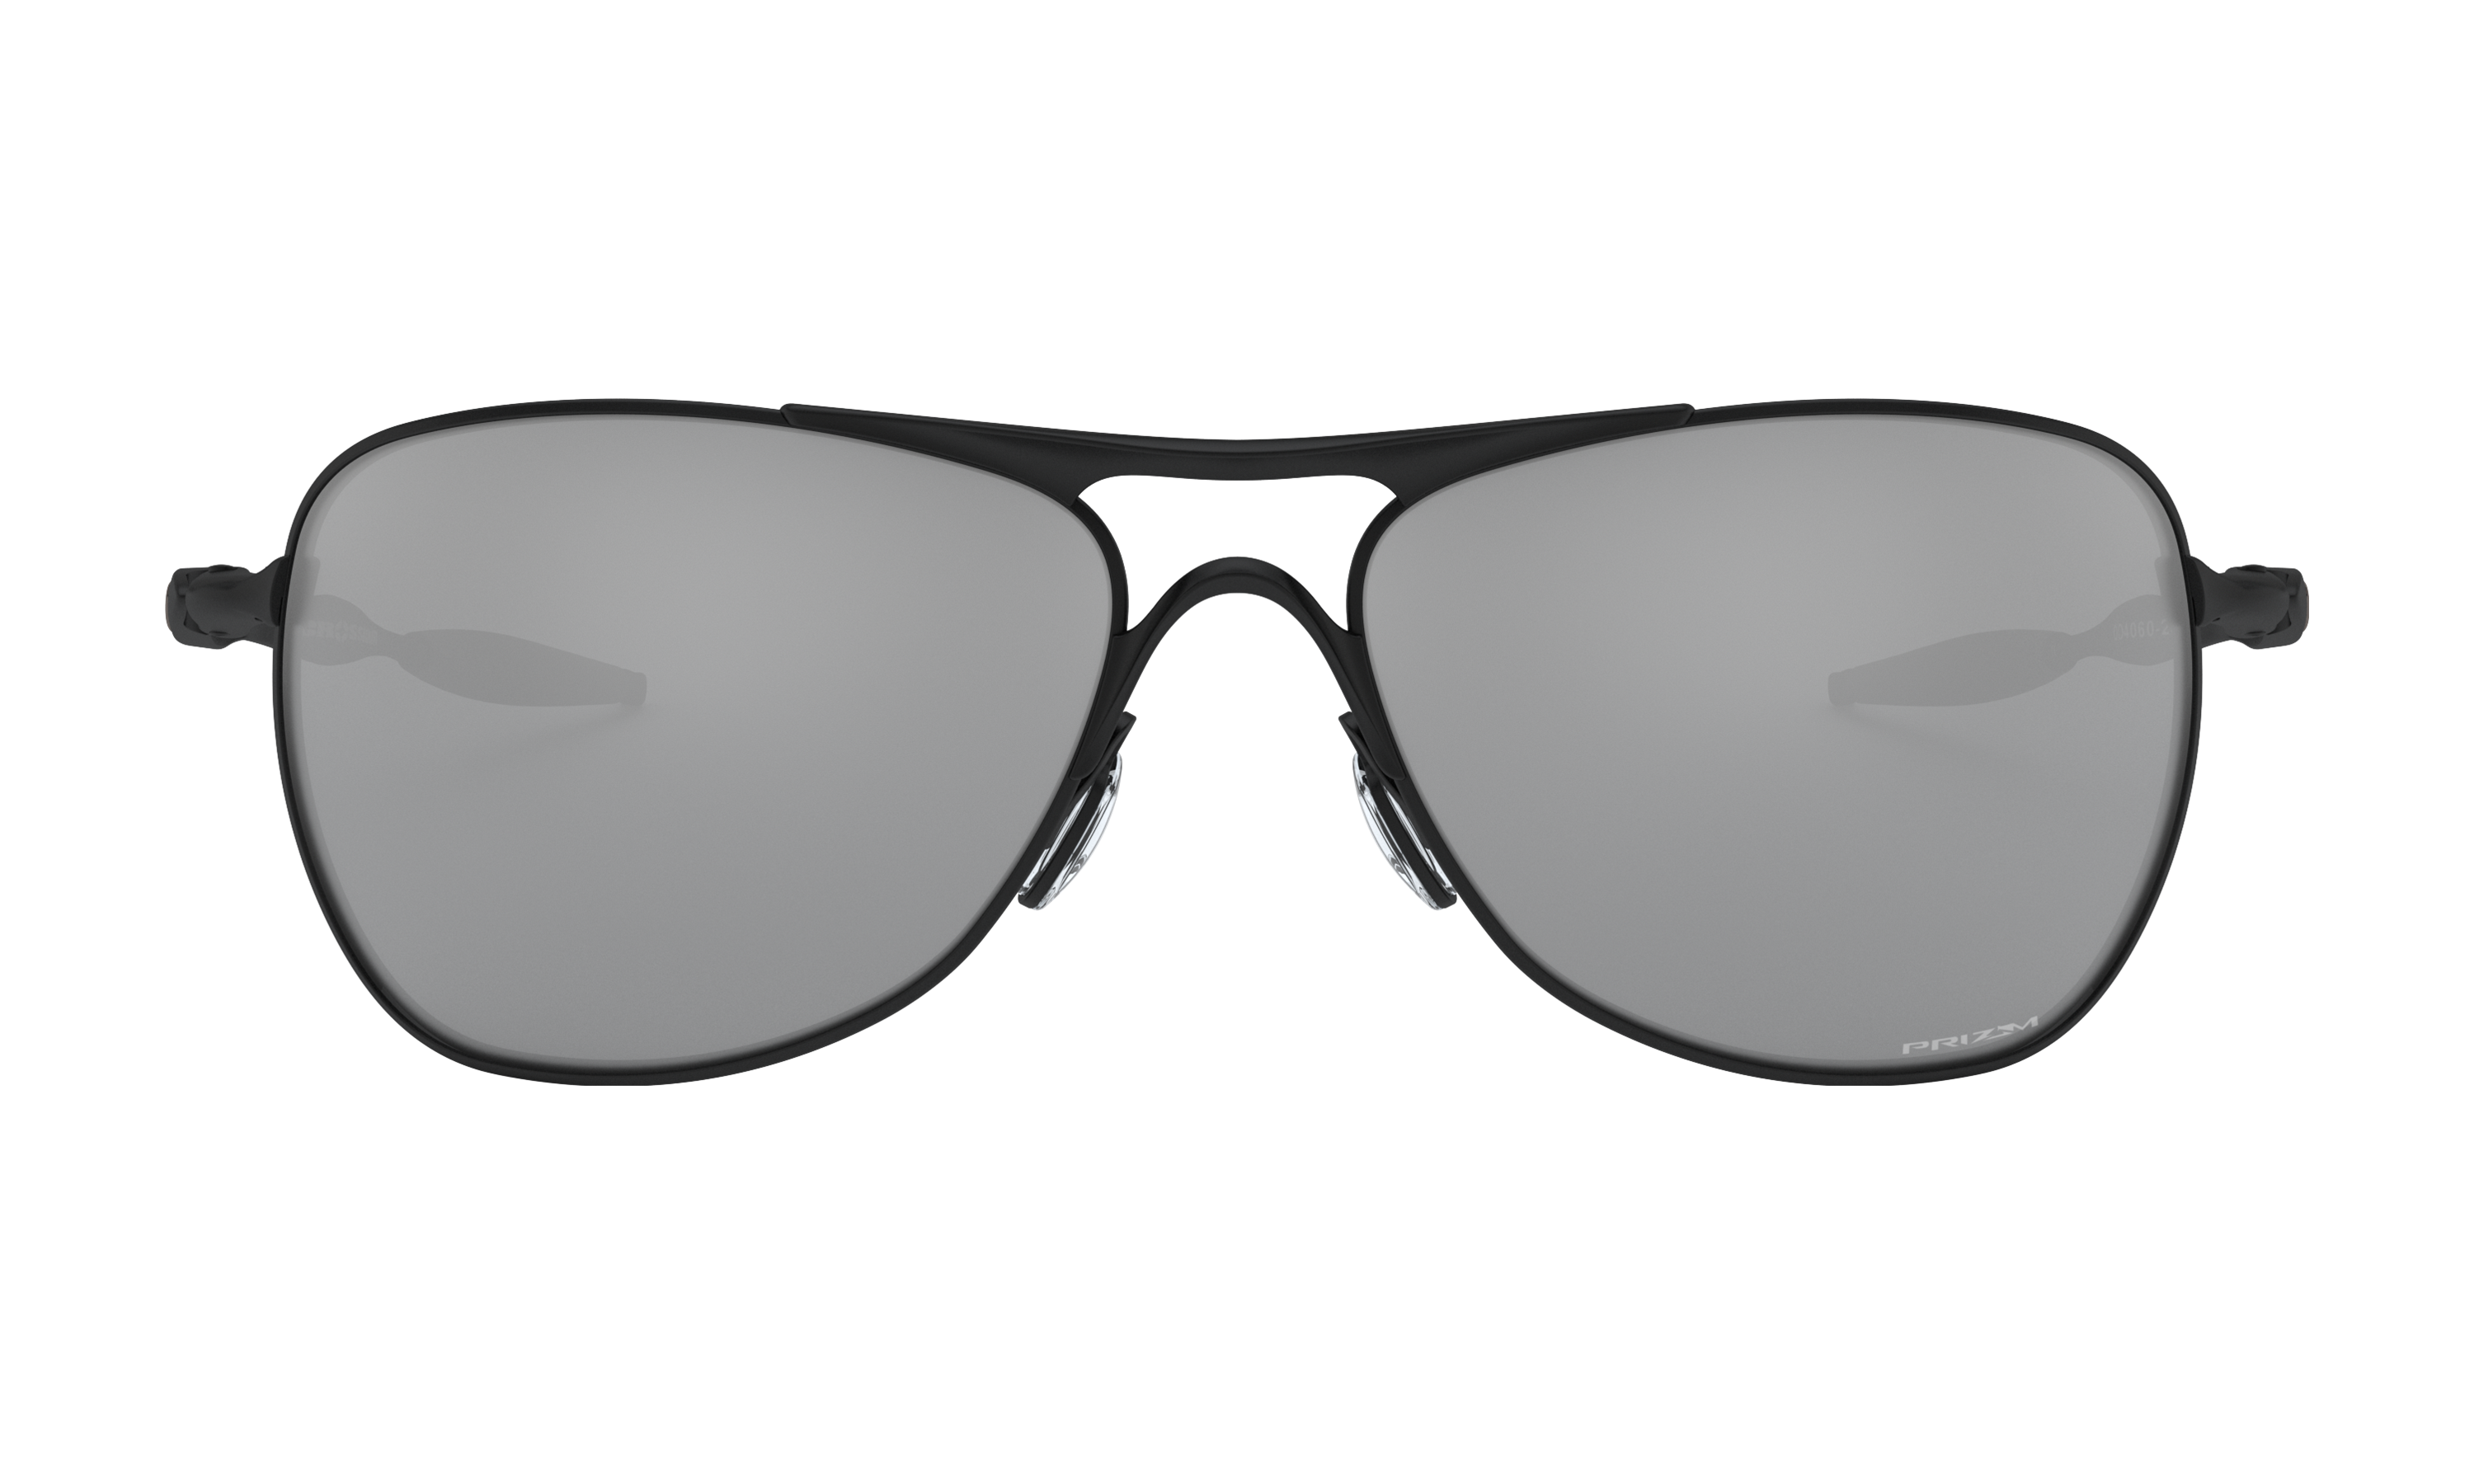 oakley crosshair s sunglasses